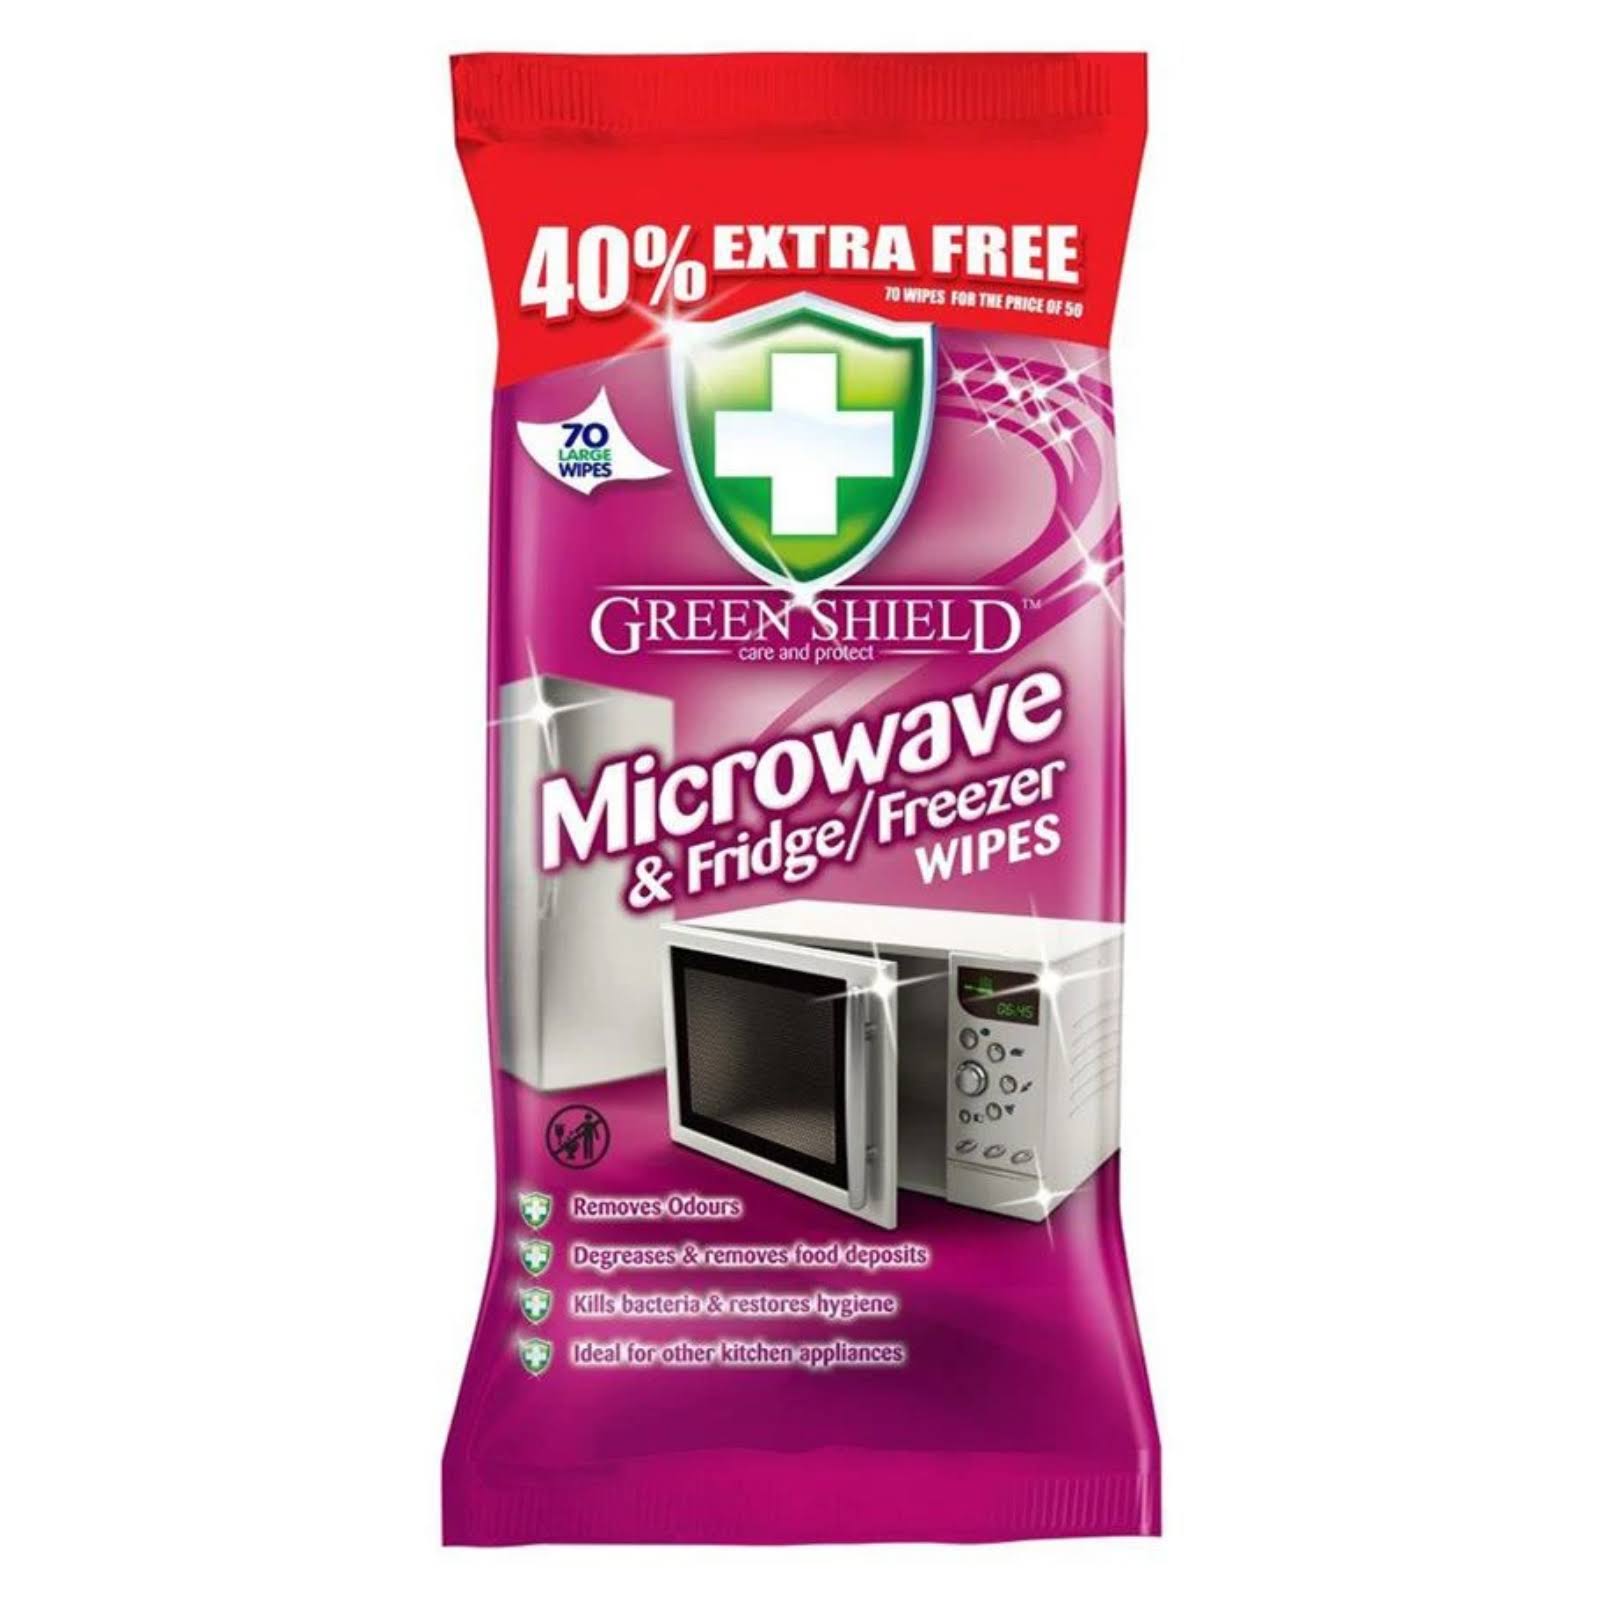 Greenshield Microwave & Fridge Freezer Wipes